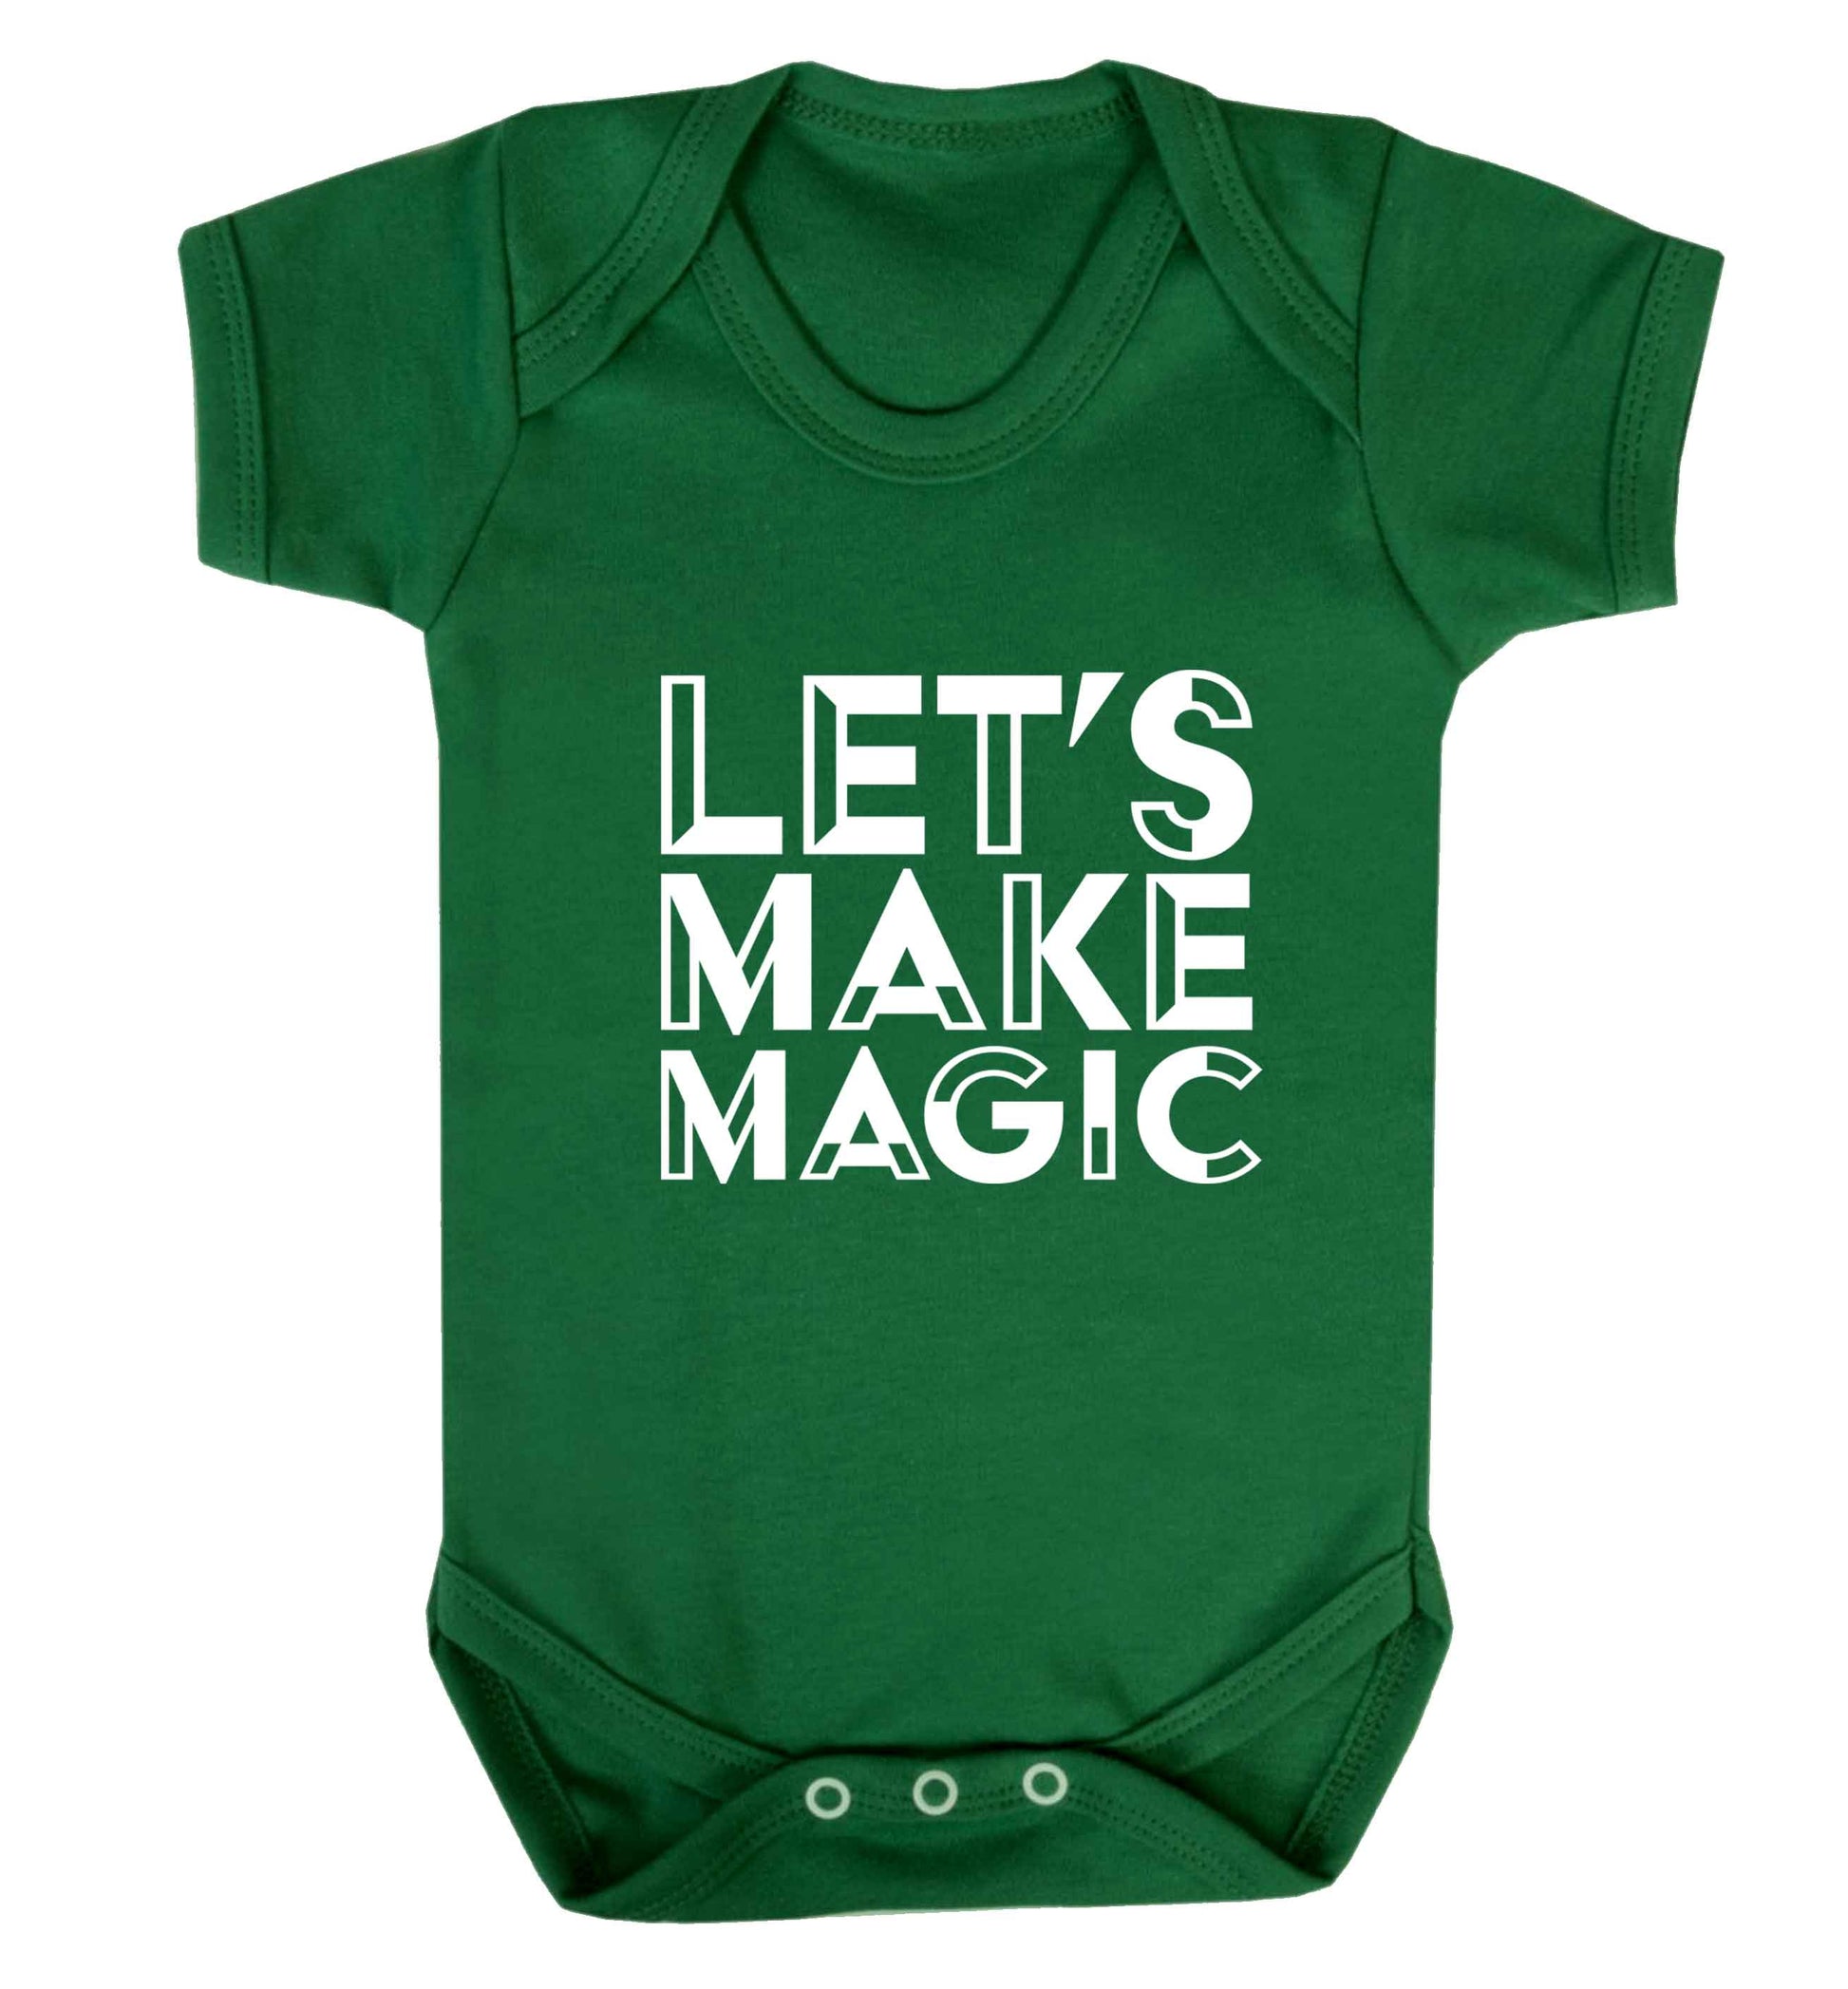 Let's make magic baby vest green 18-24 months